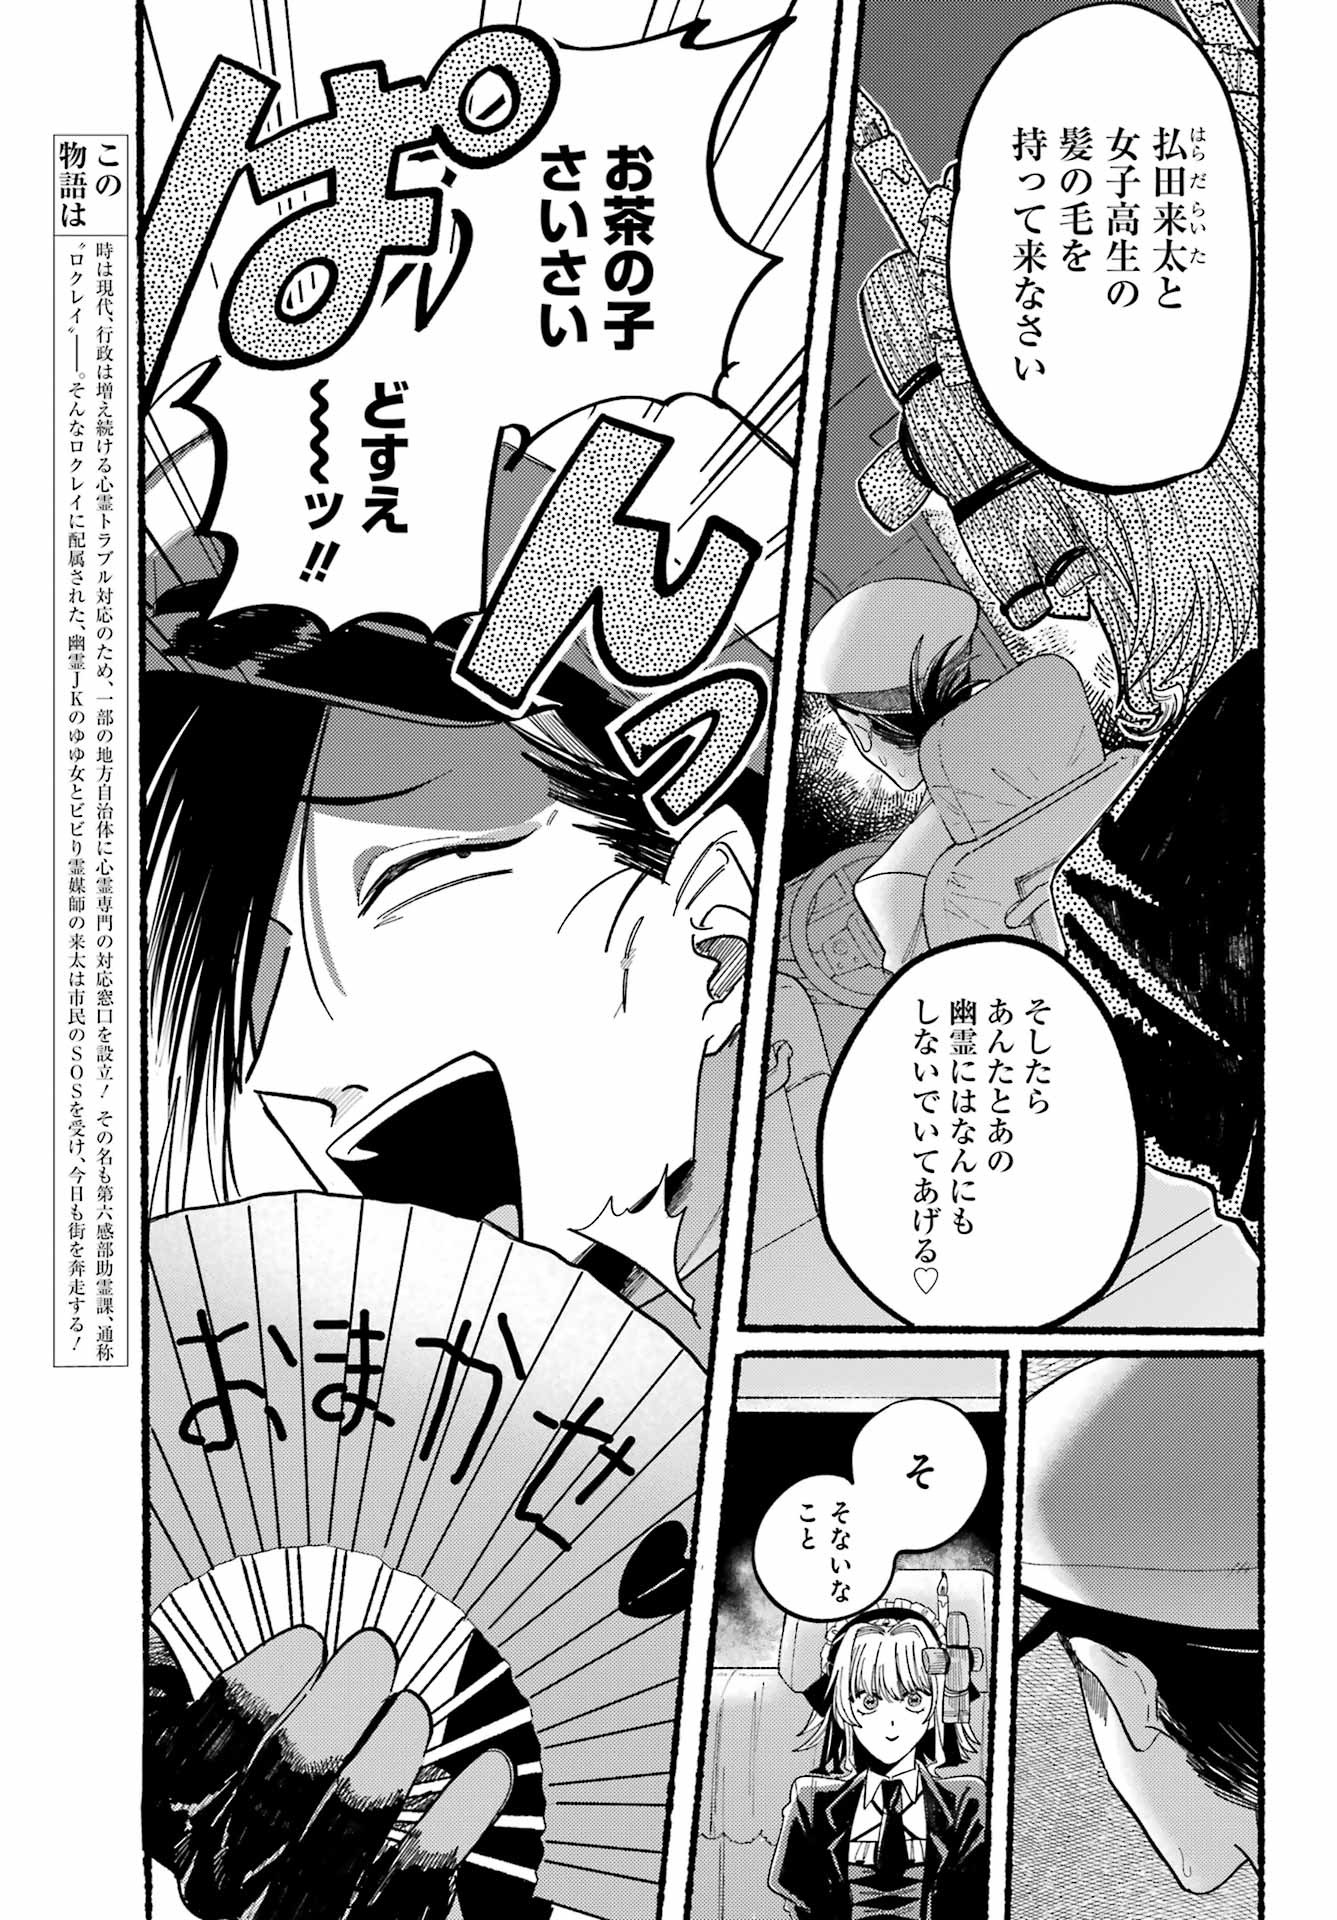 Rokurei - Tenseishi Rinne Kuyakusho Dairokkanbu Joreika Katsudouki - Chapter 10 - Page 3